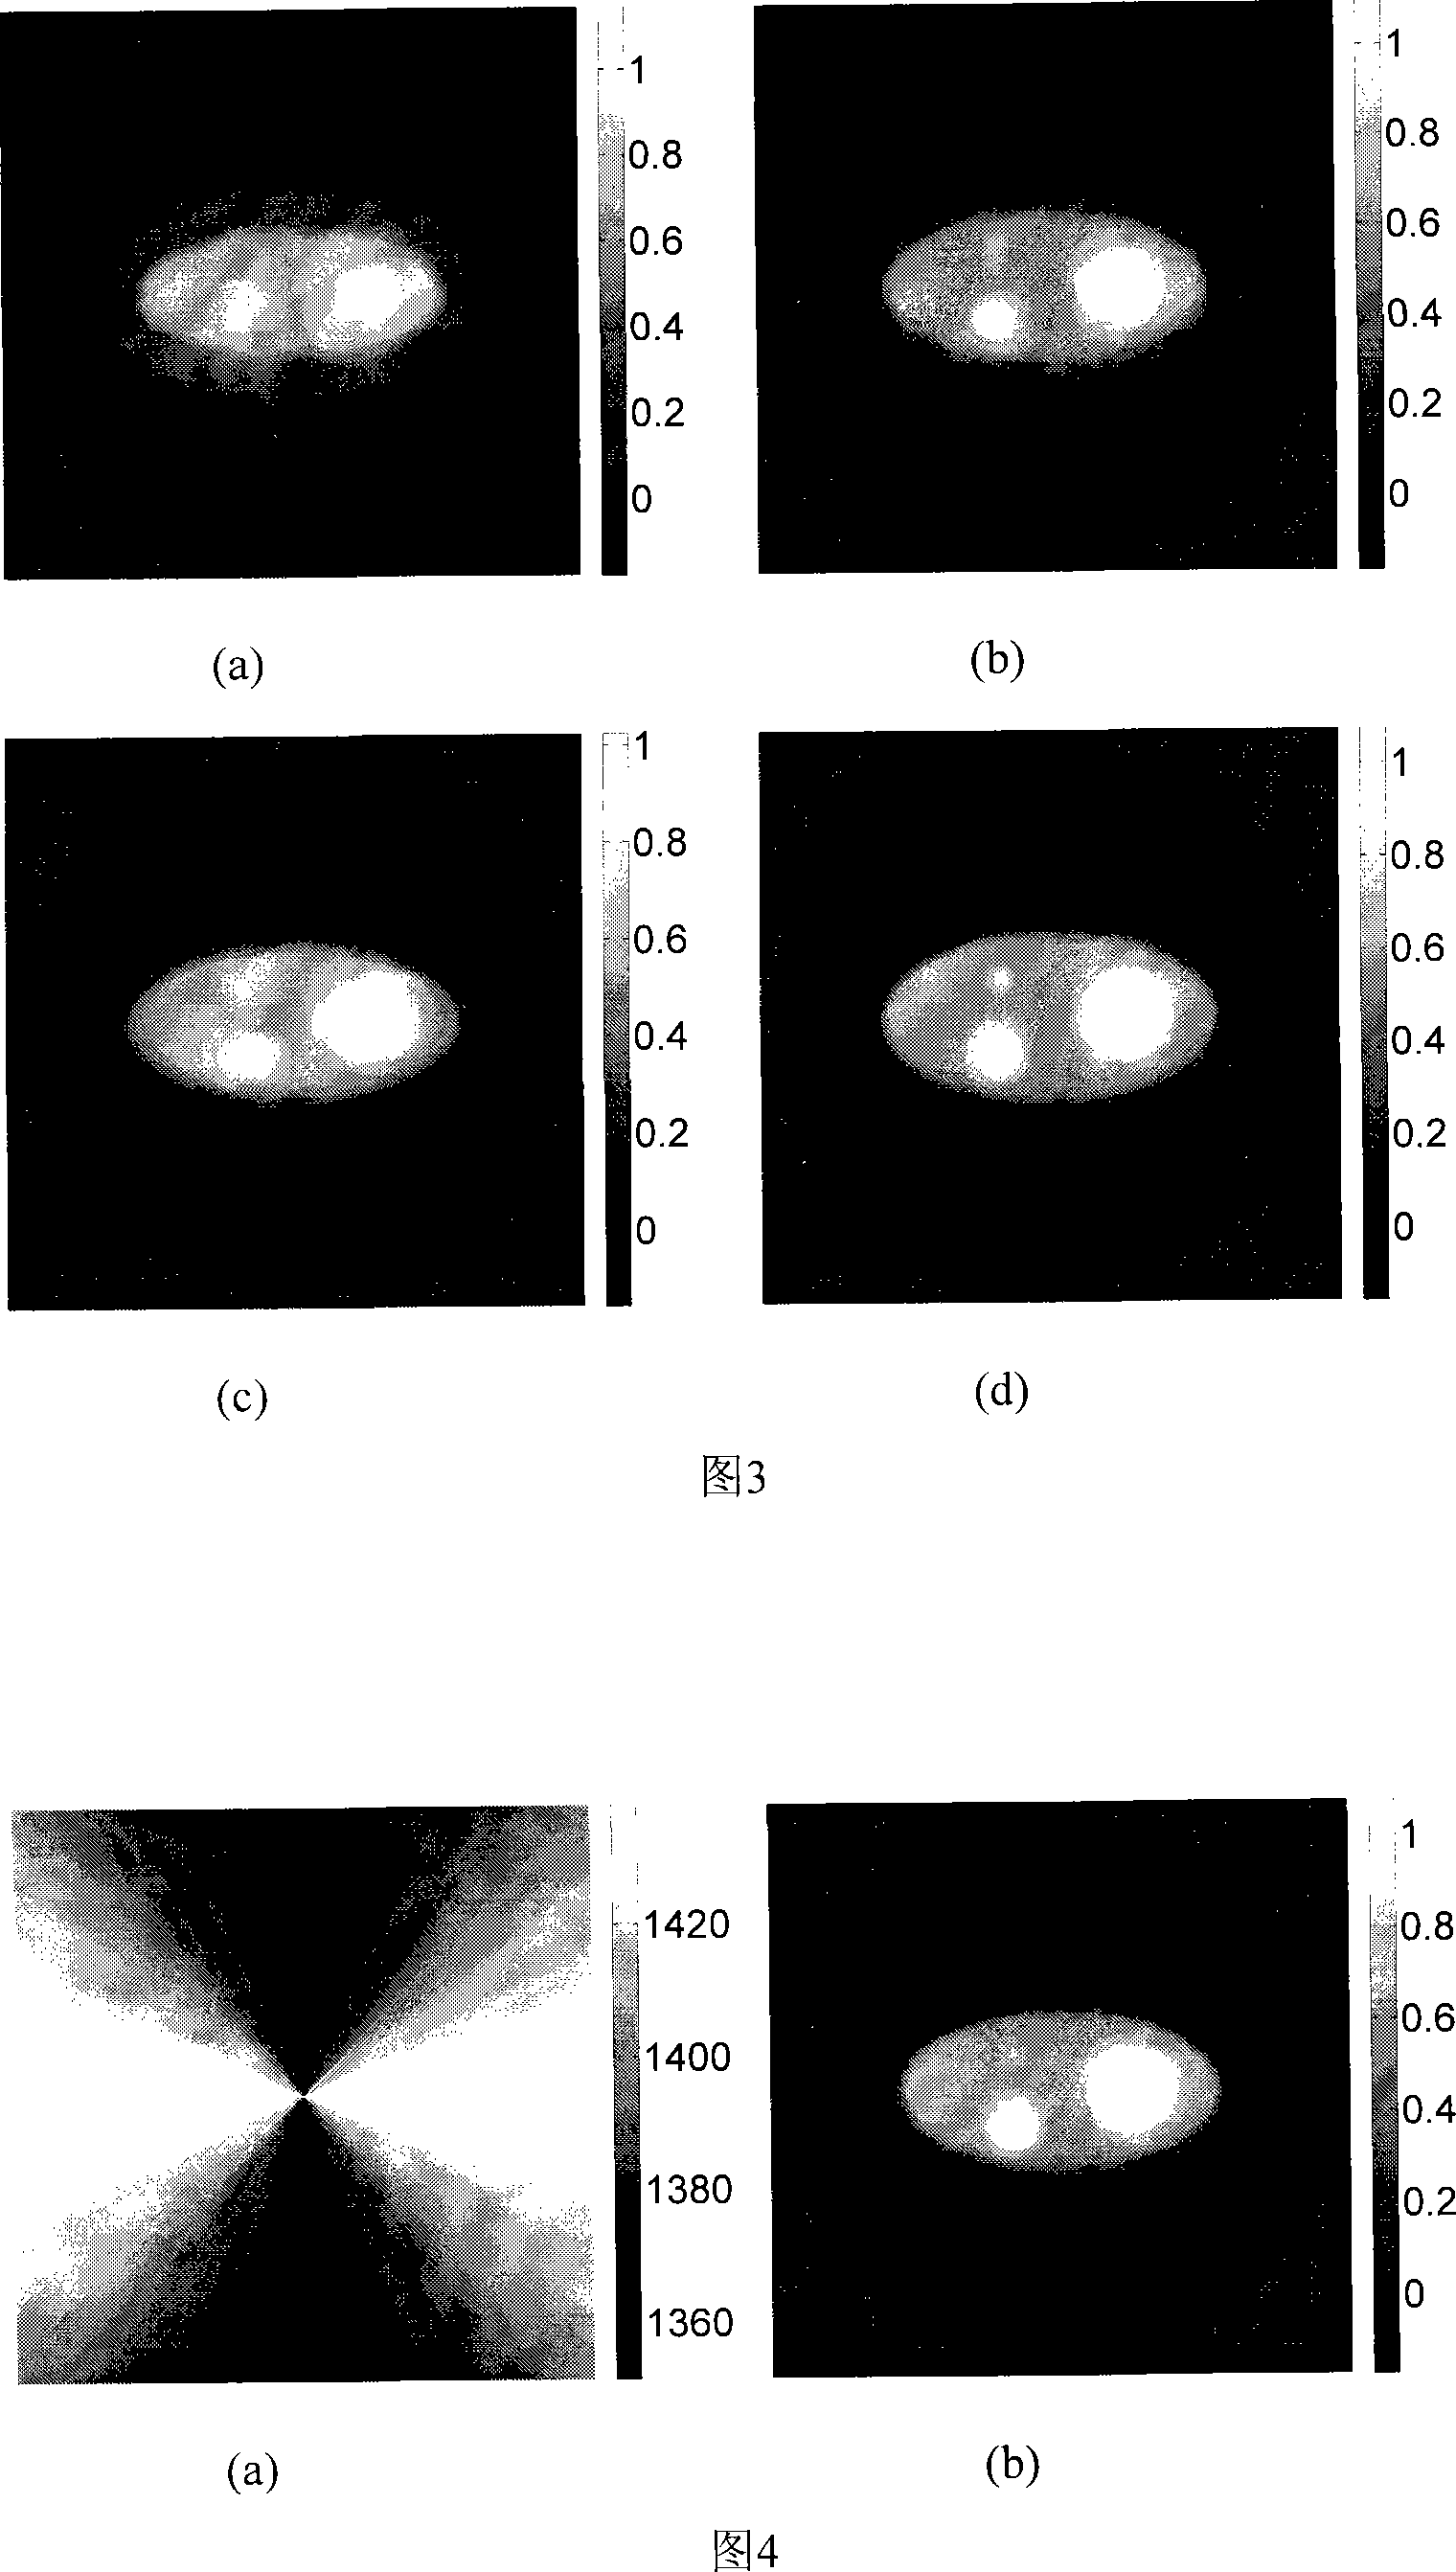 Acoustic velocity inhomogeneous medium thermoacoustic imaging reconstruction algorithm